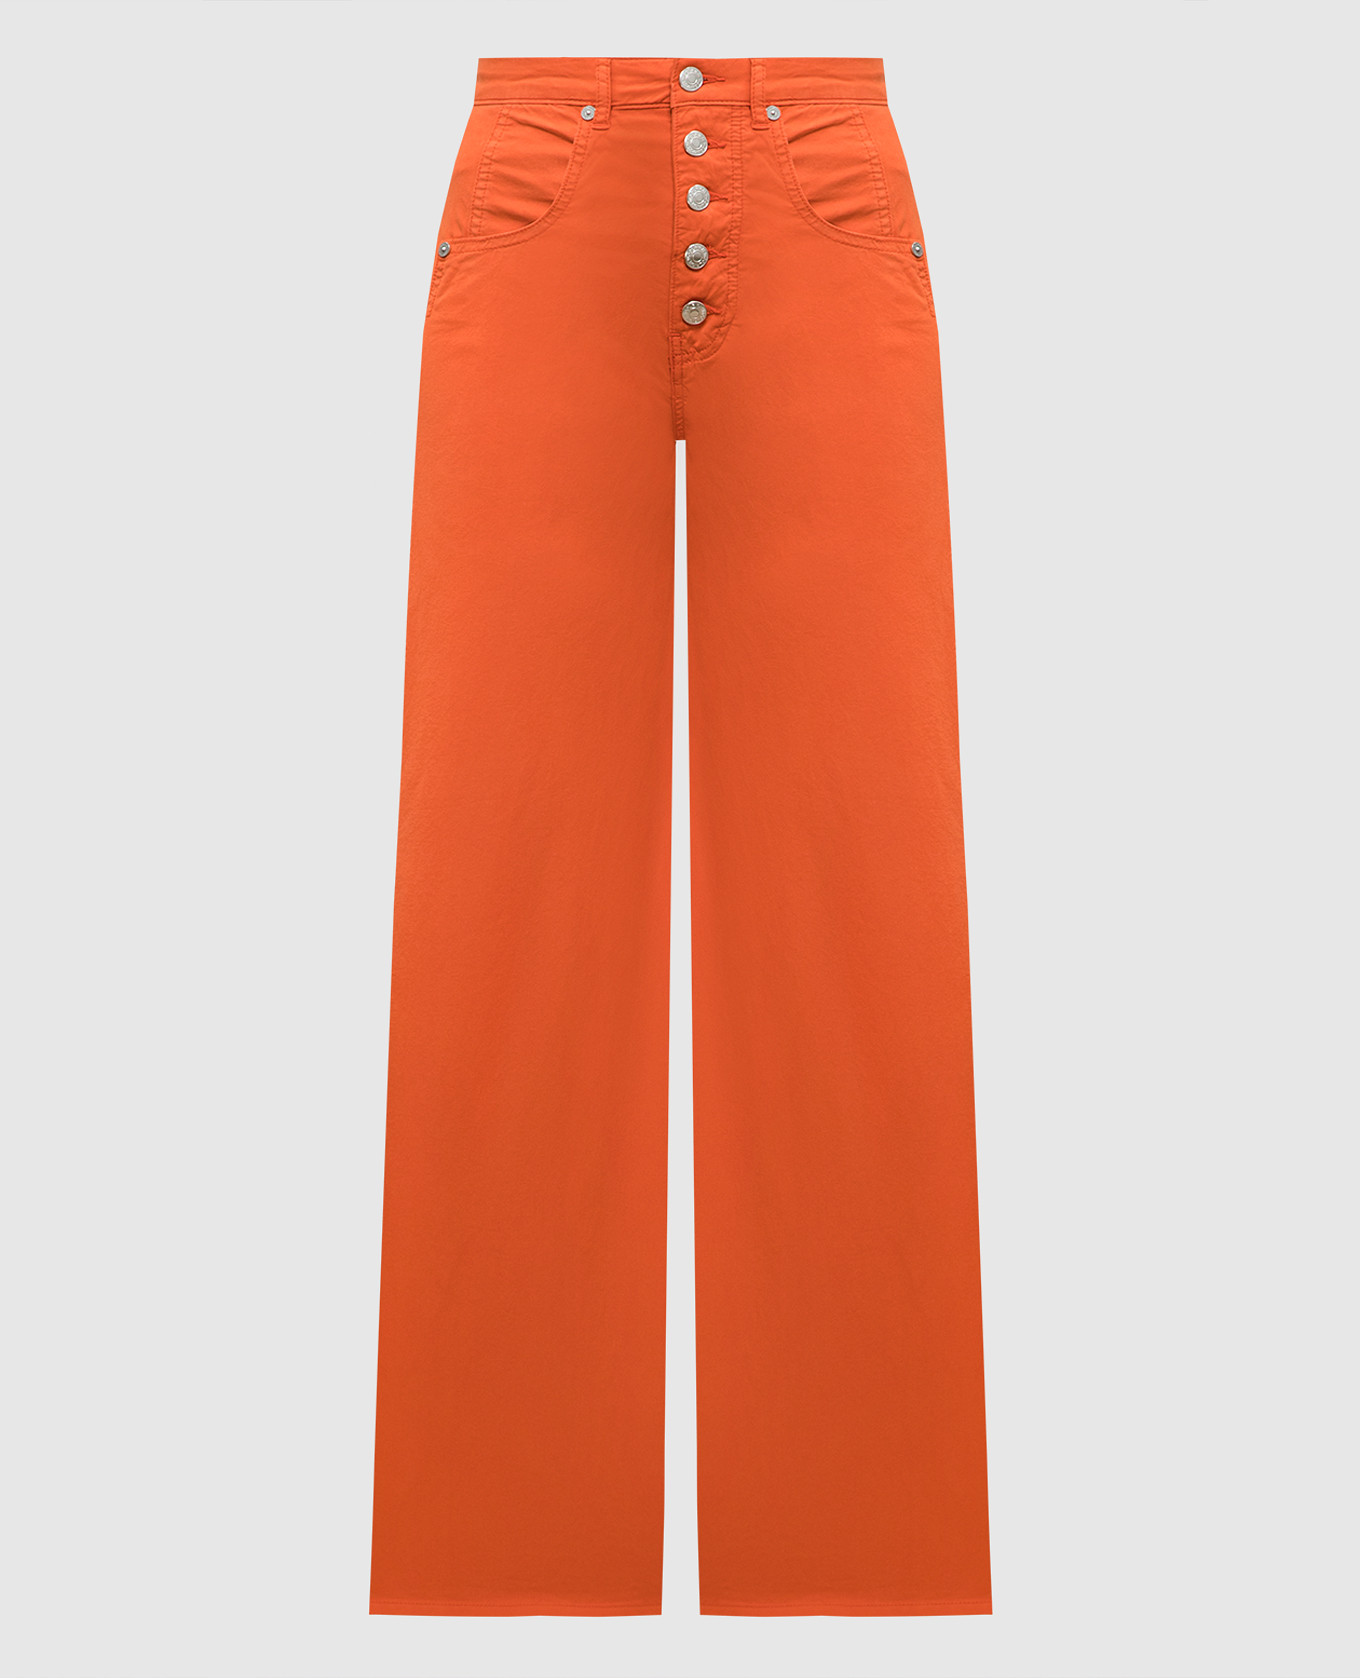 Orange pants with logo patch